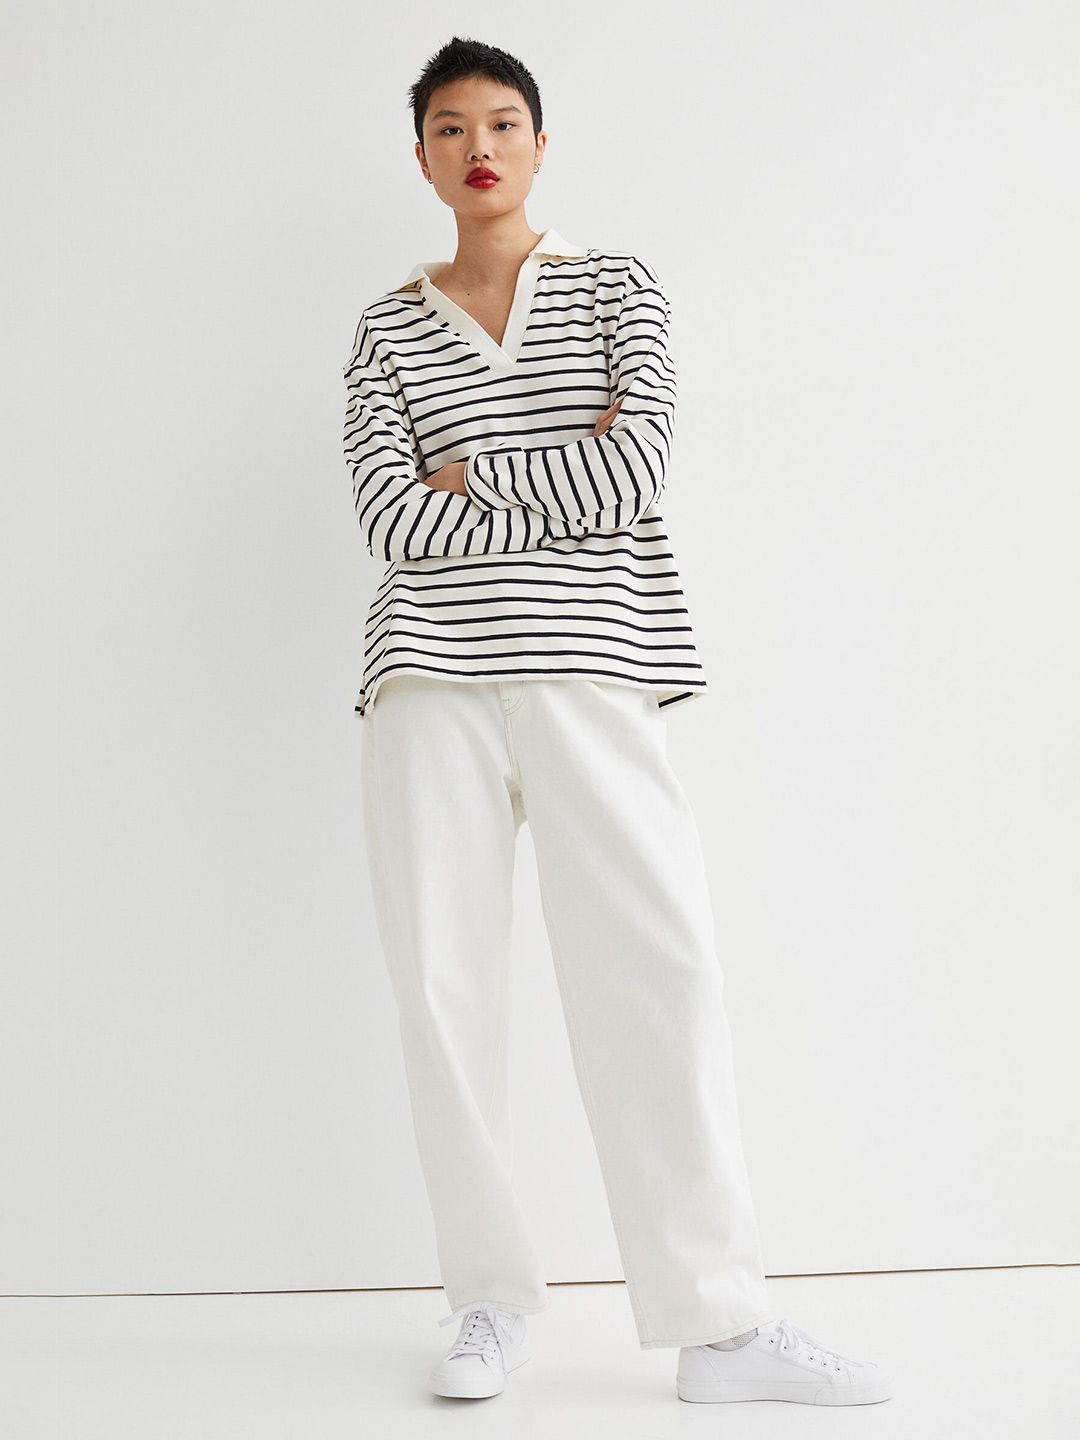 H&M Women Black & White Striped Collared Sweatshirt Price in India